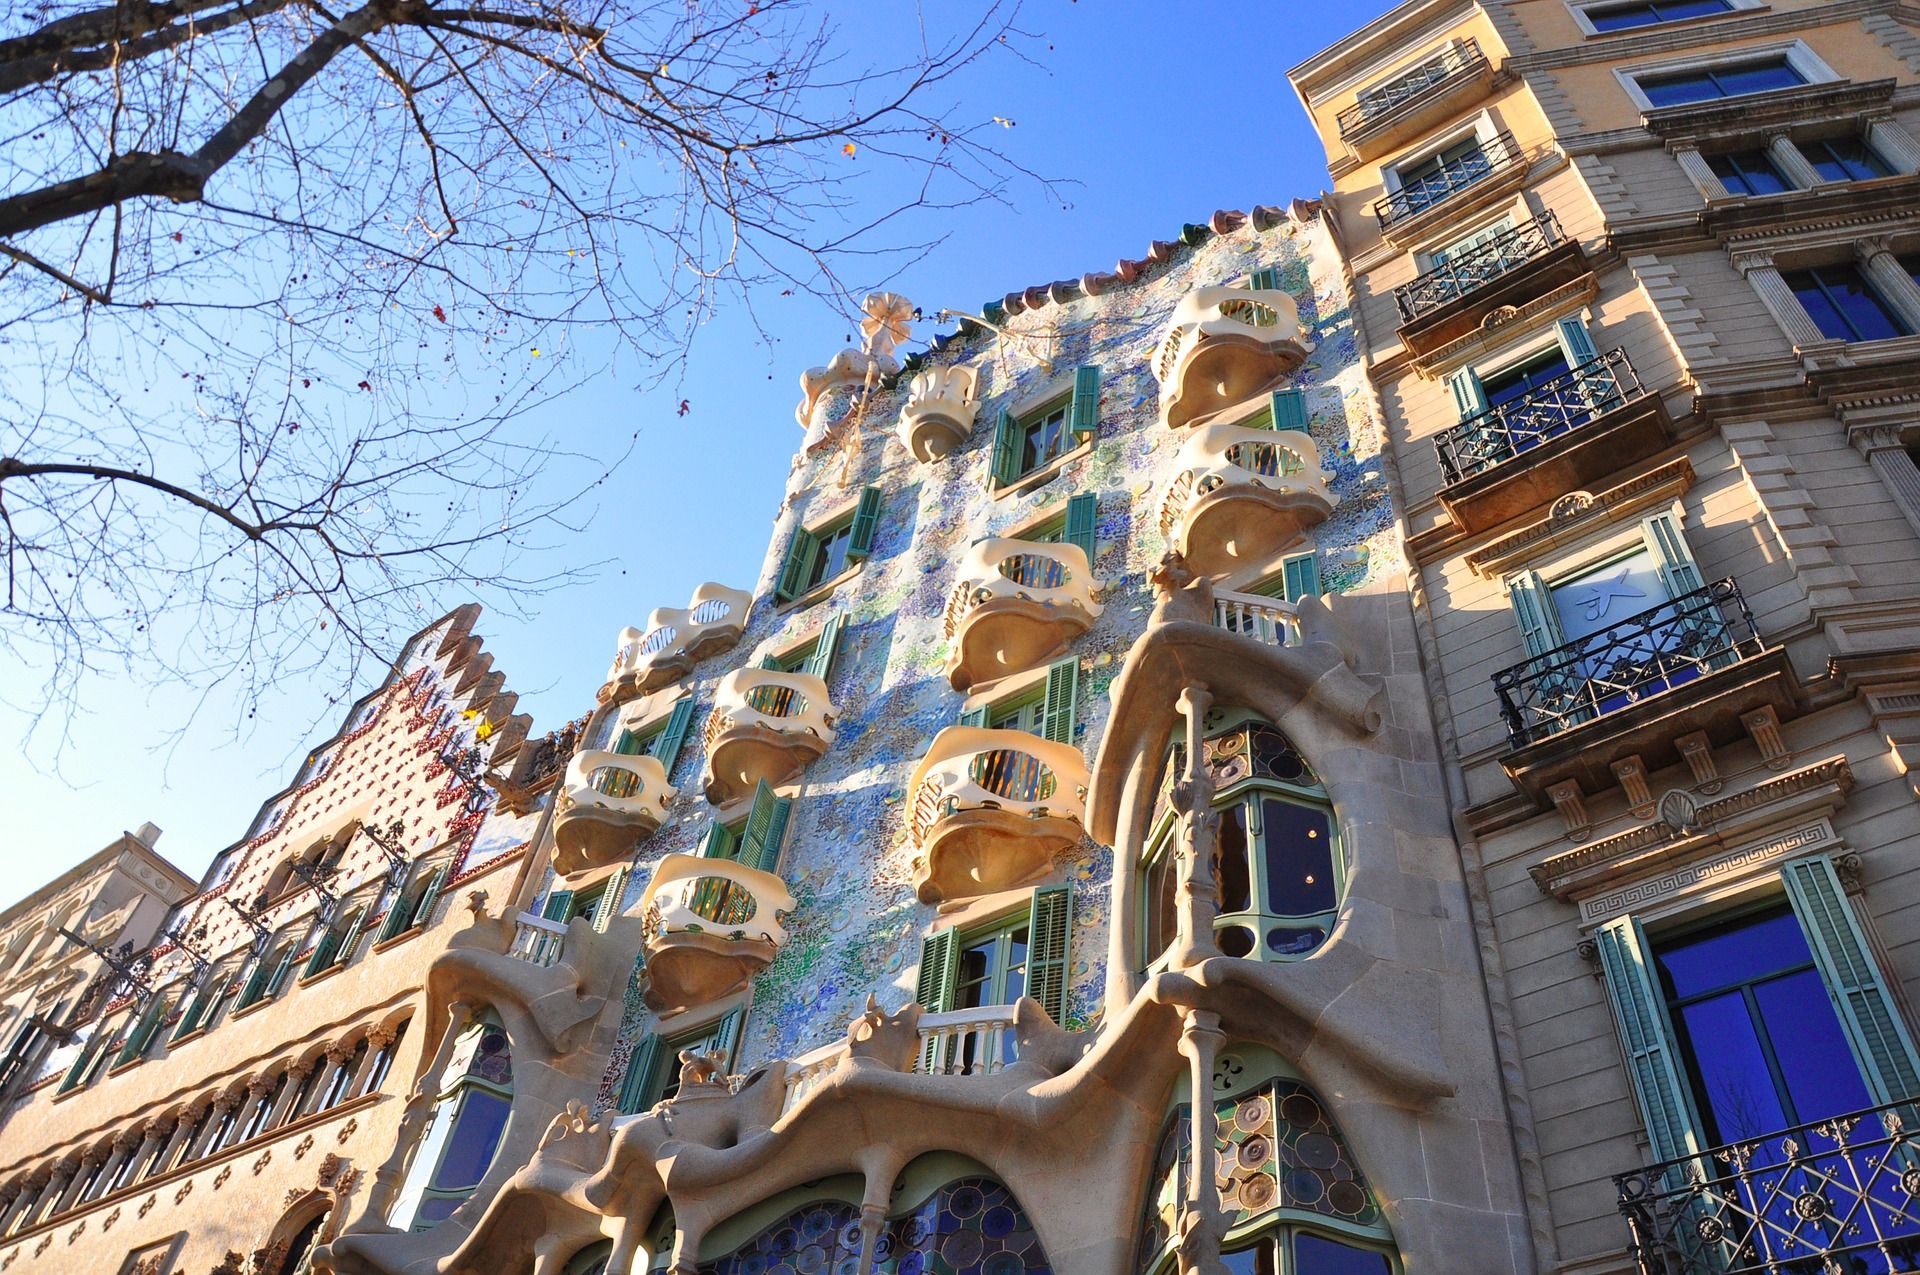 Casa Batllo and Casa Amatller in Barcelona, Spain